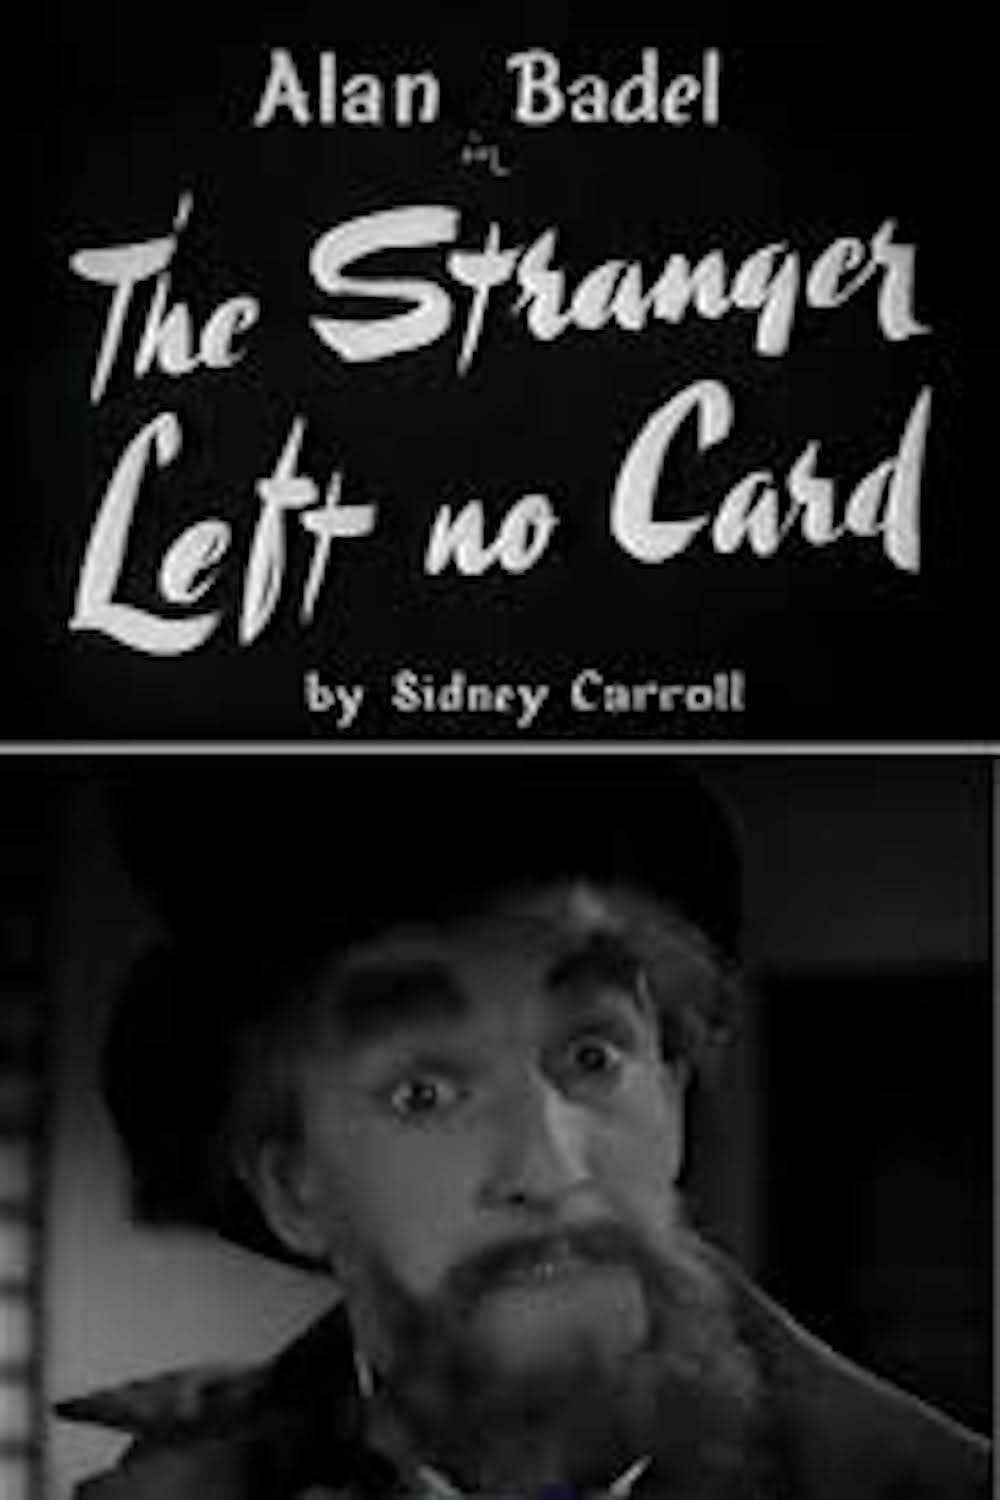 Caratula de The Stranger Left No Card (Stranger Left No card) 